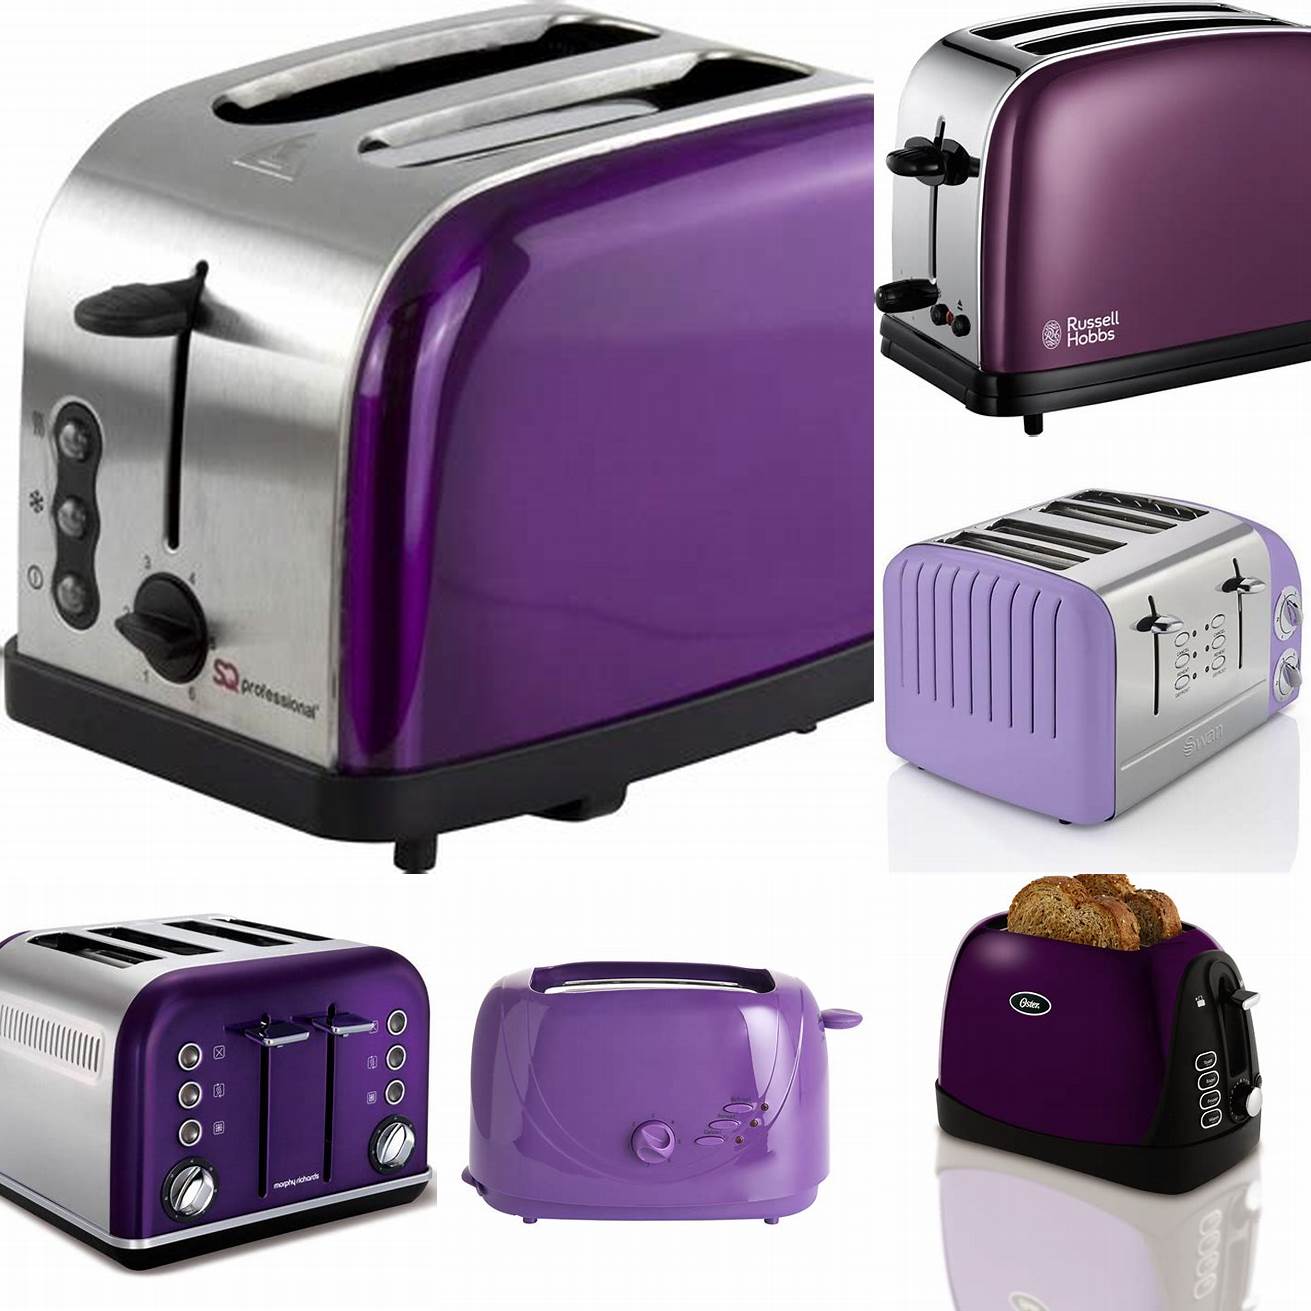 A purple toaster